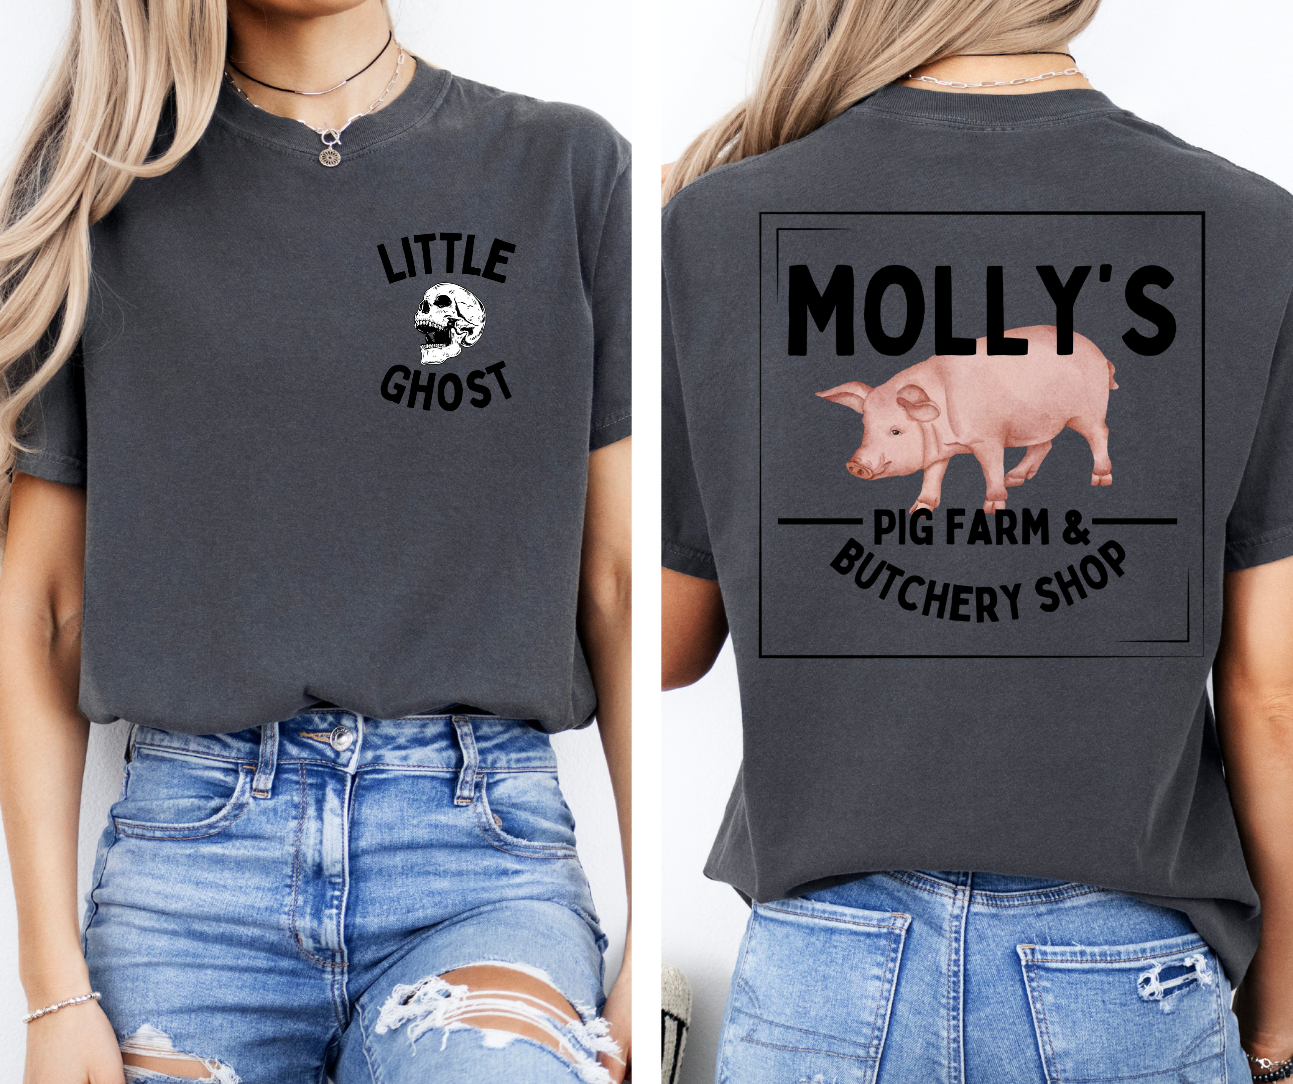 Mollys Pig Farm